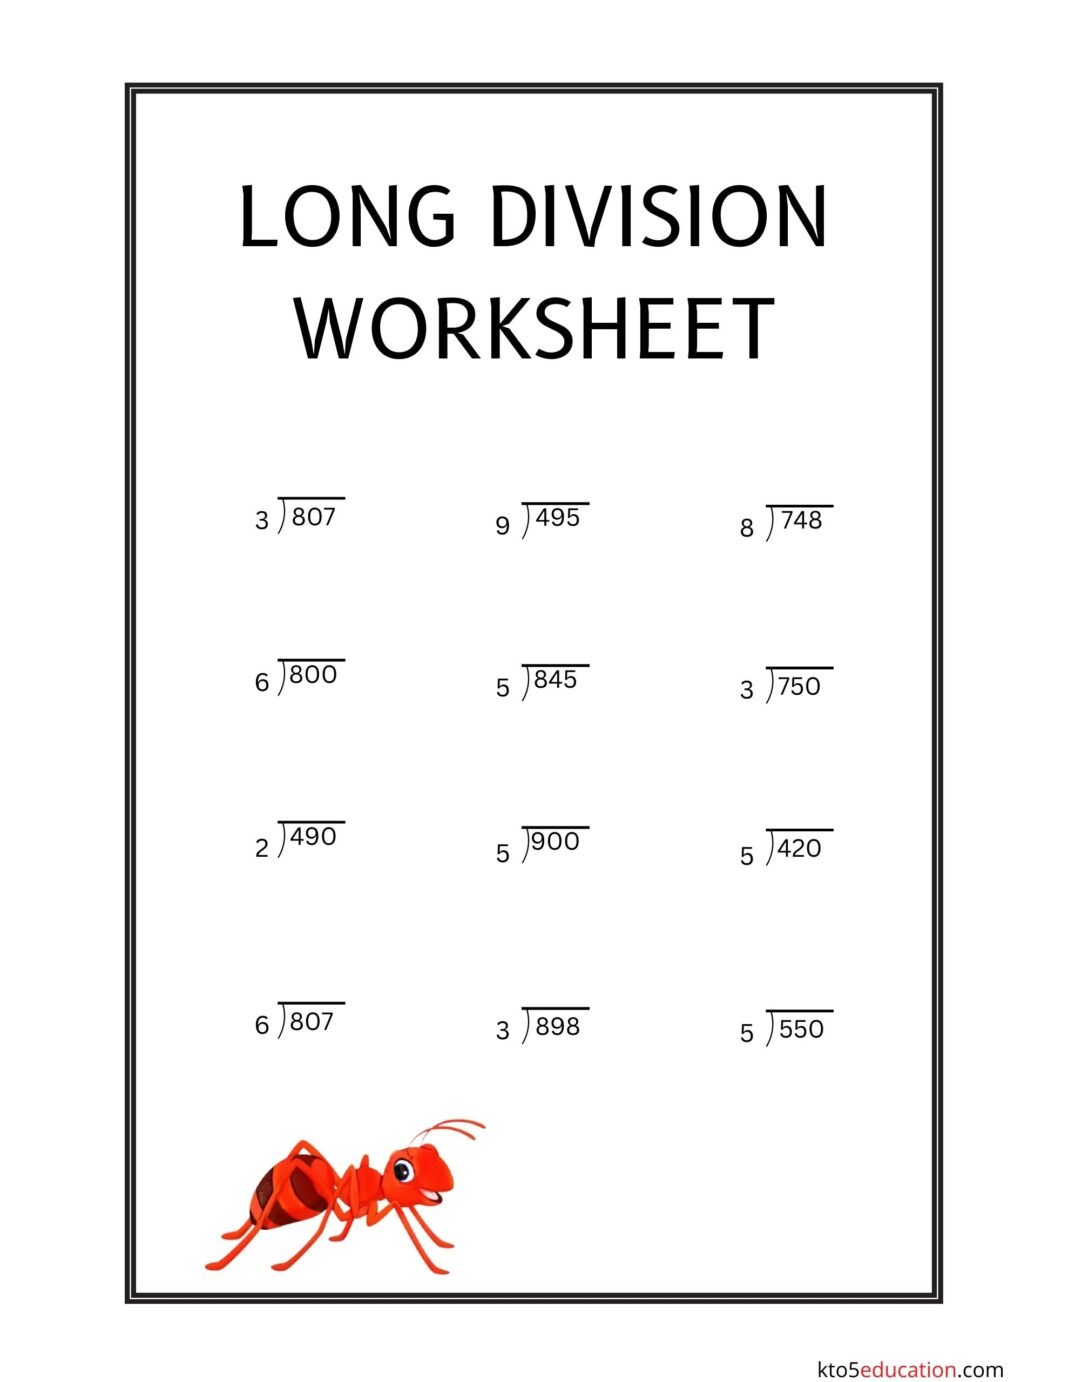 subtraction-fractions-worksheet-for-kids-free-download